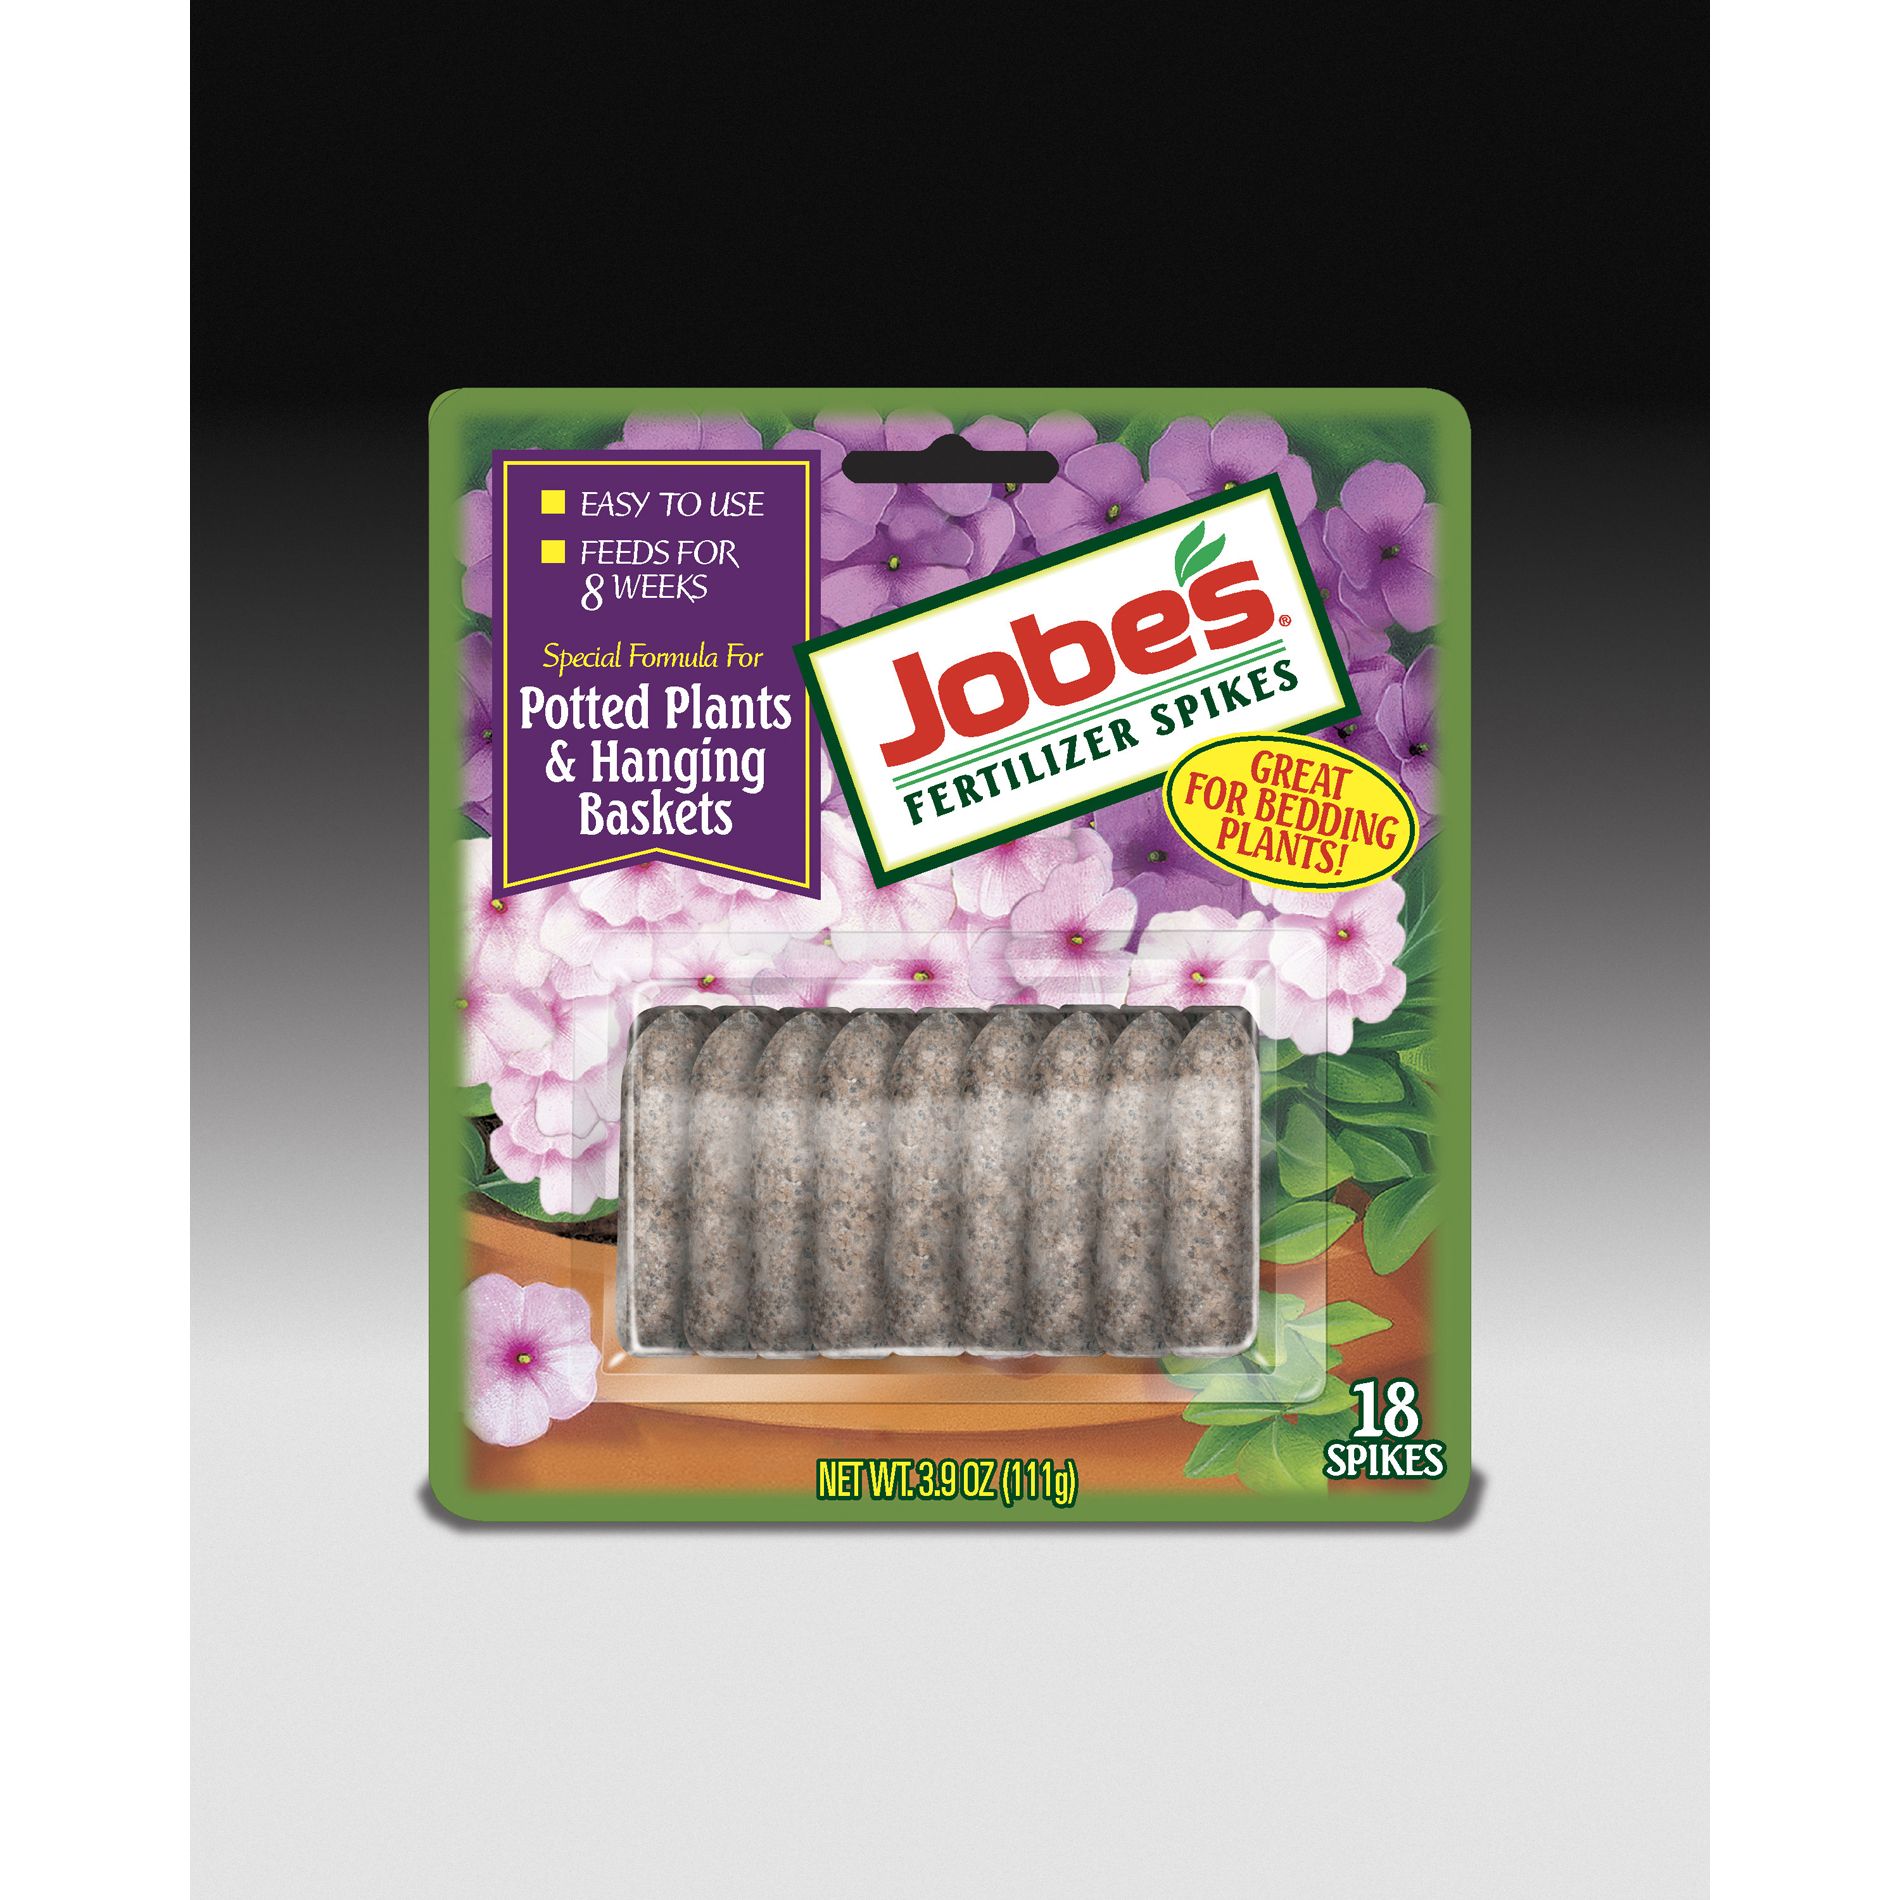 EGP06100 Jobe's Fertilizer Spikes for Potted Plants